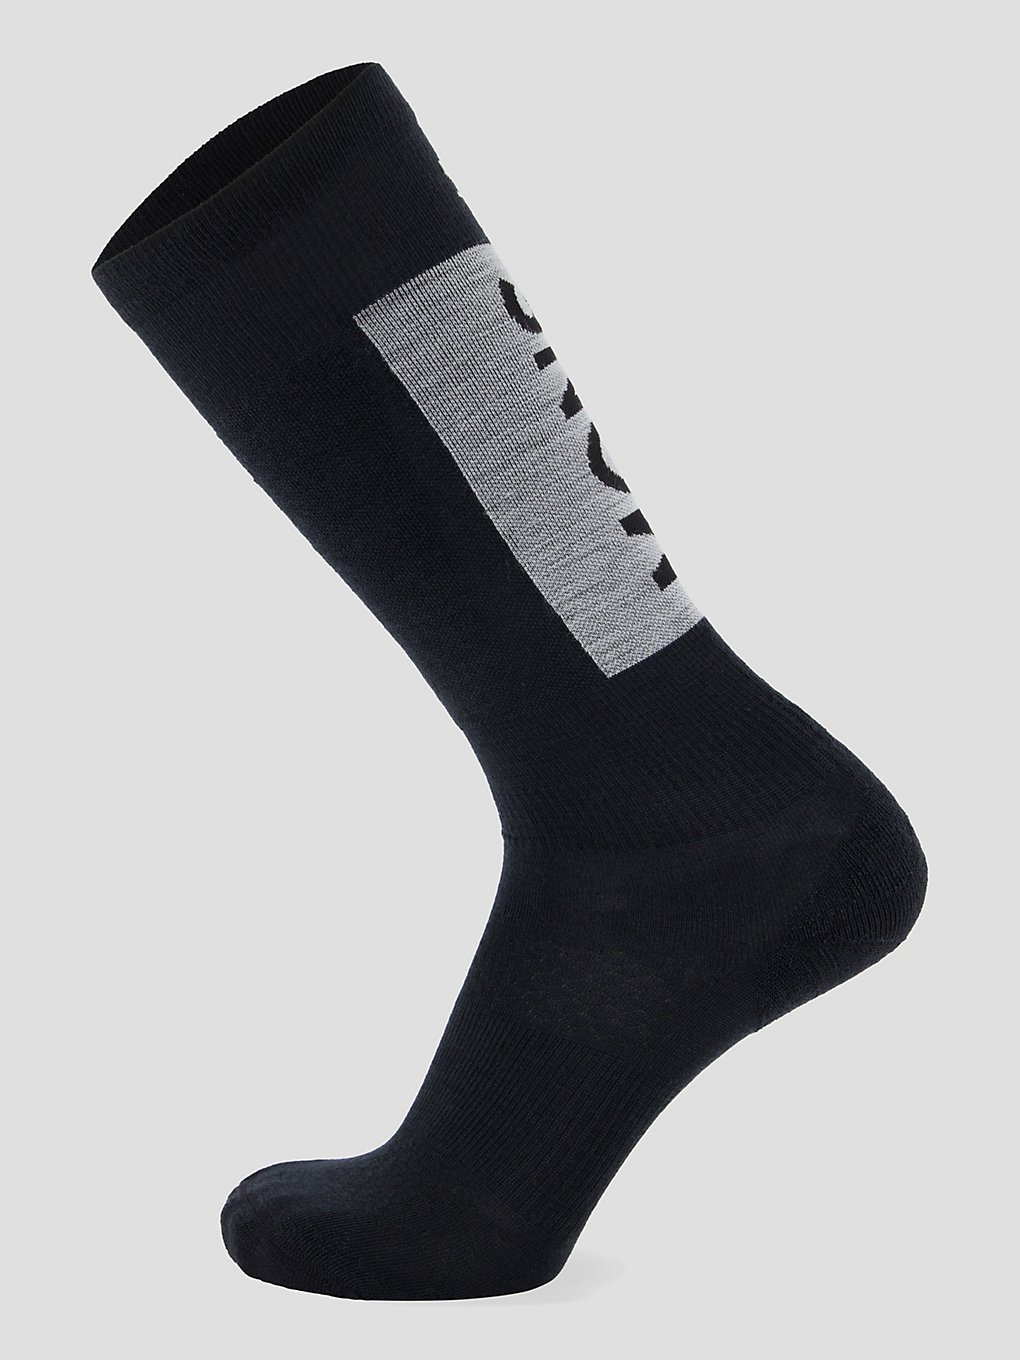 Mons Royale Atlas Merino Snow Tech Socks black kaufen